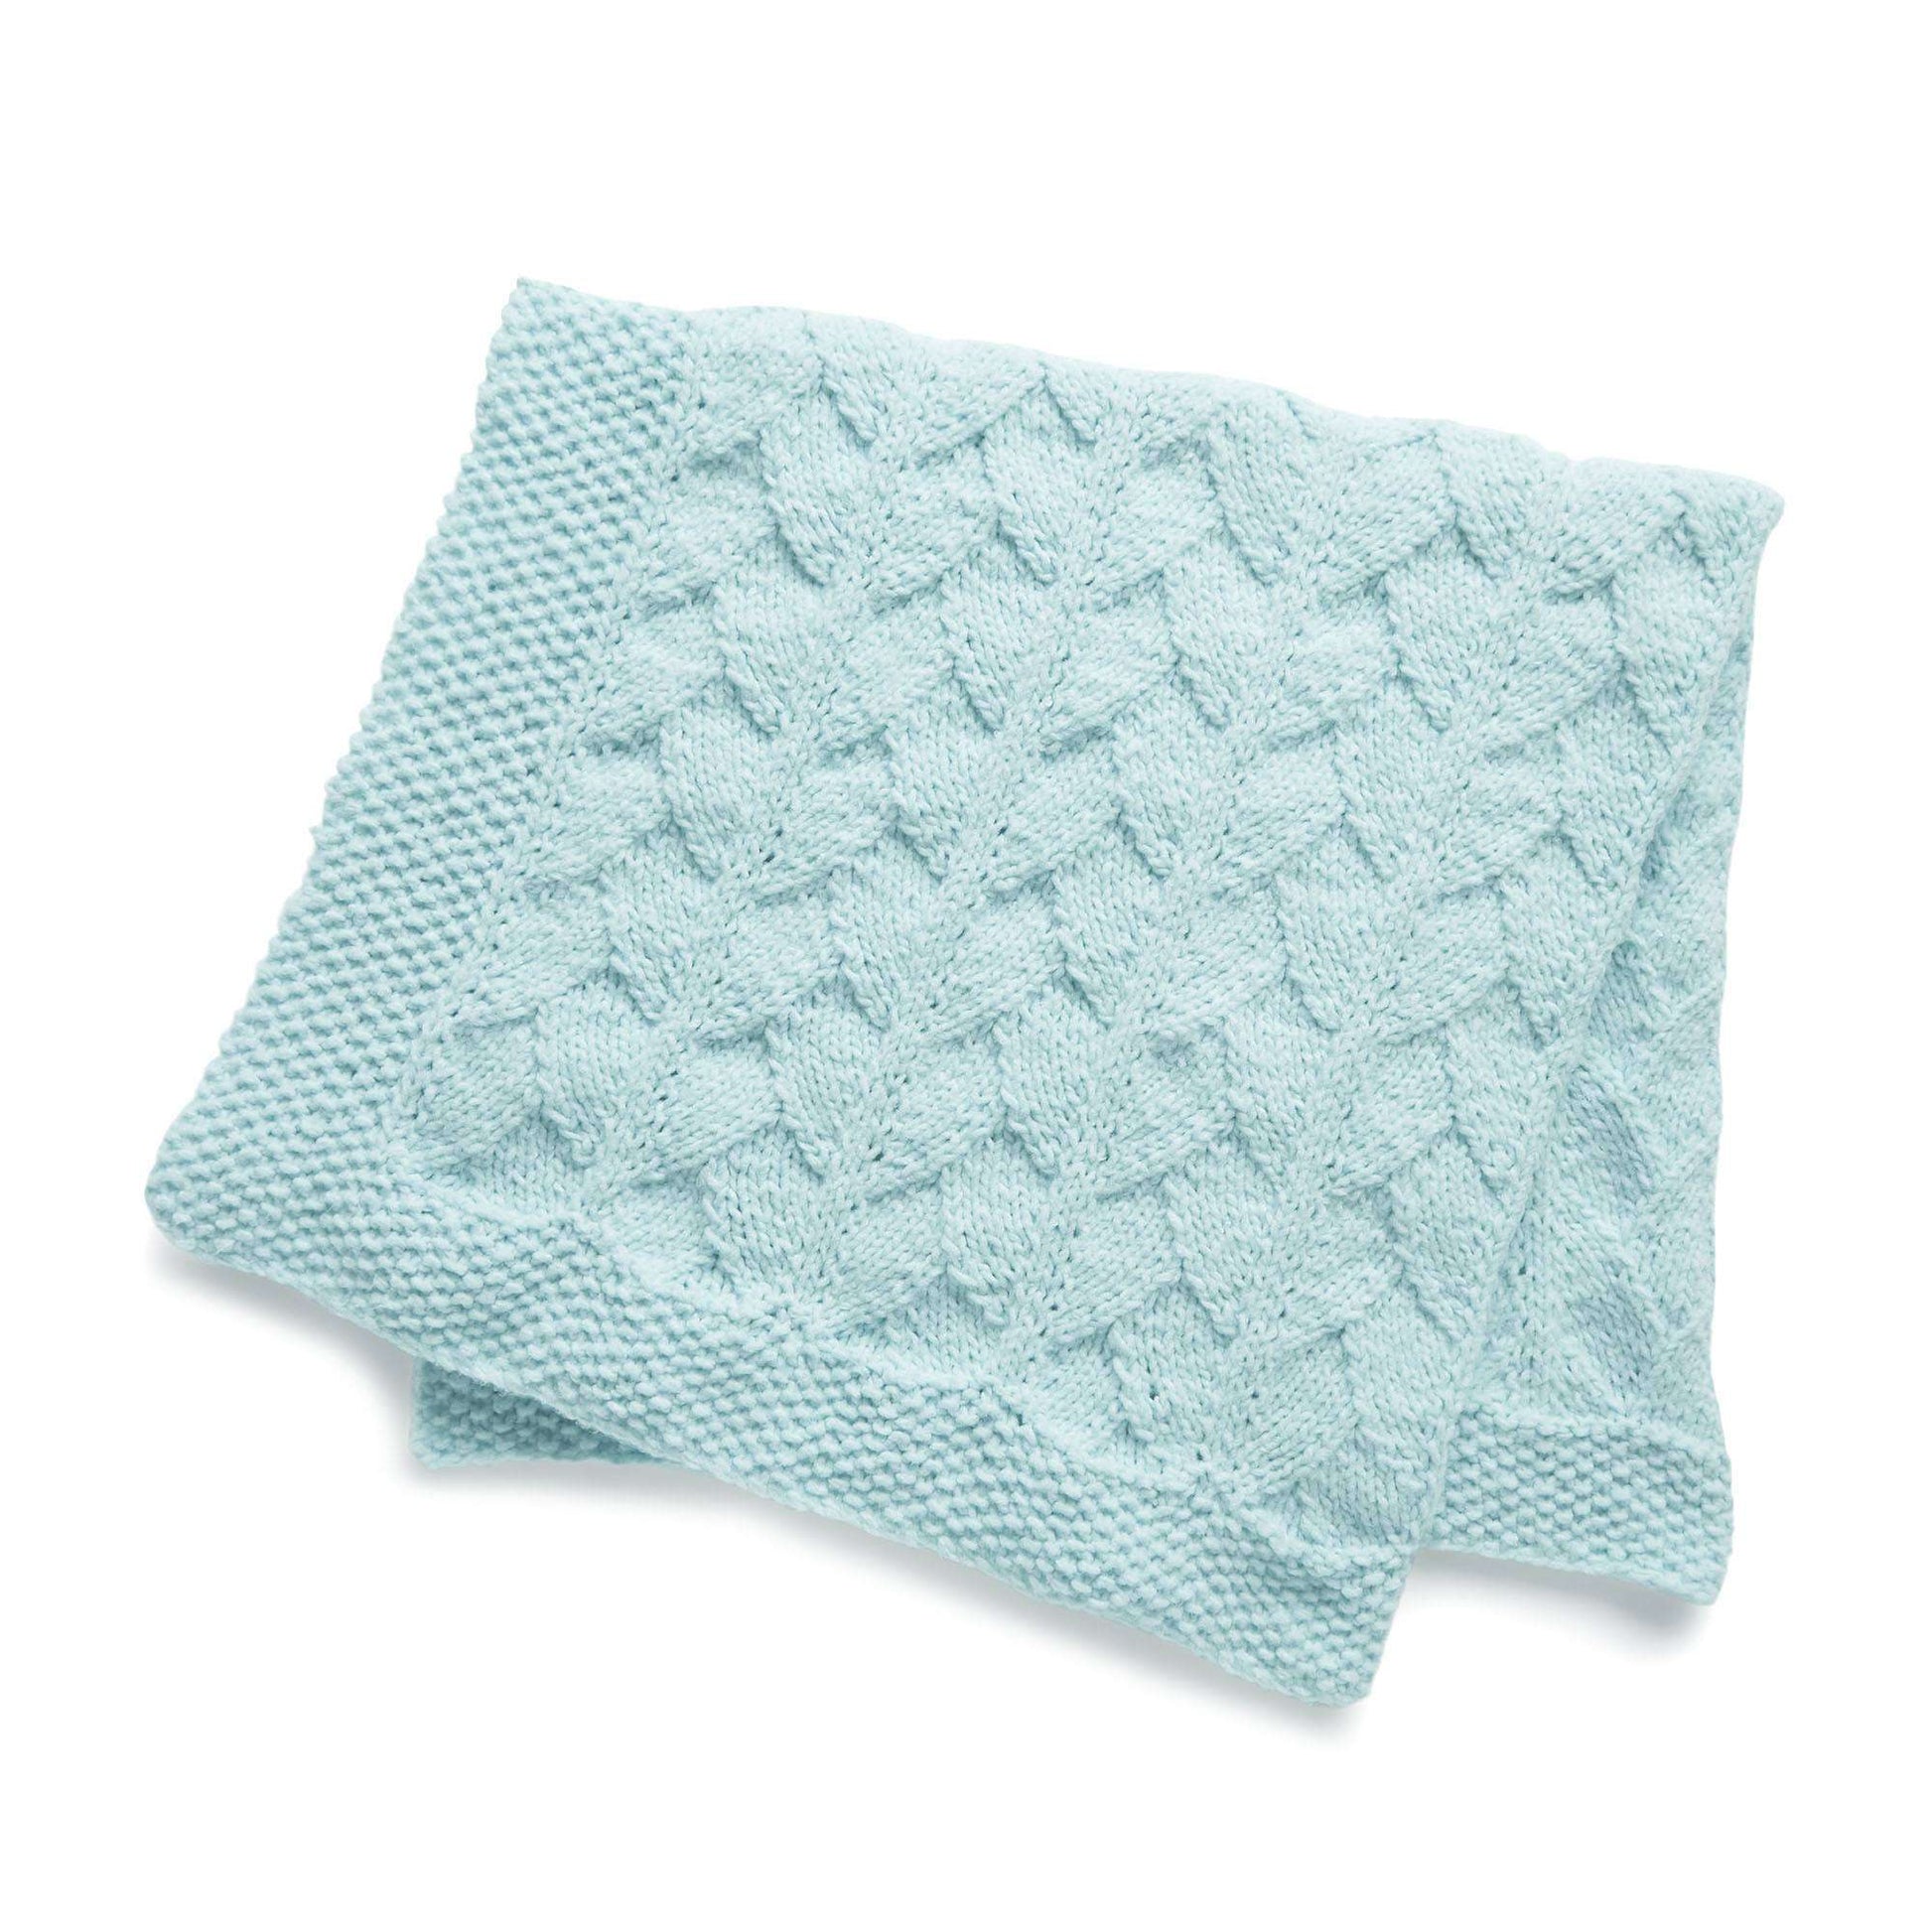 Bernat Knit Dragon Scales Baby Blanket Knit Blanket made in Bernat Forever Fleece Finer yarn